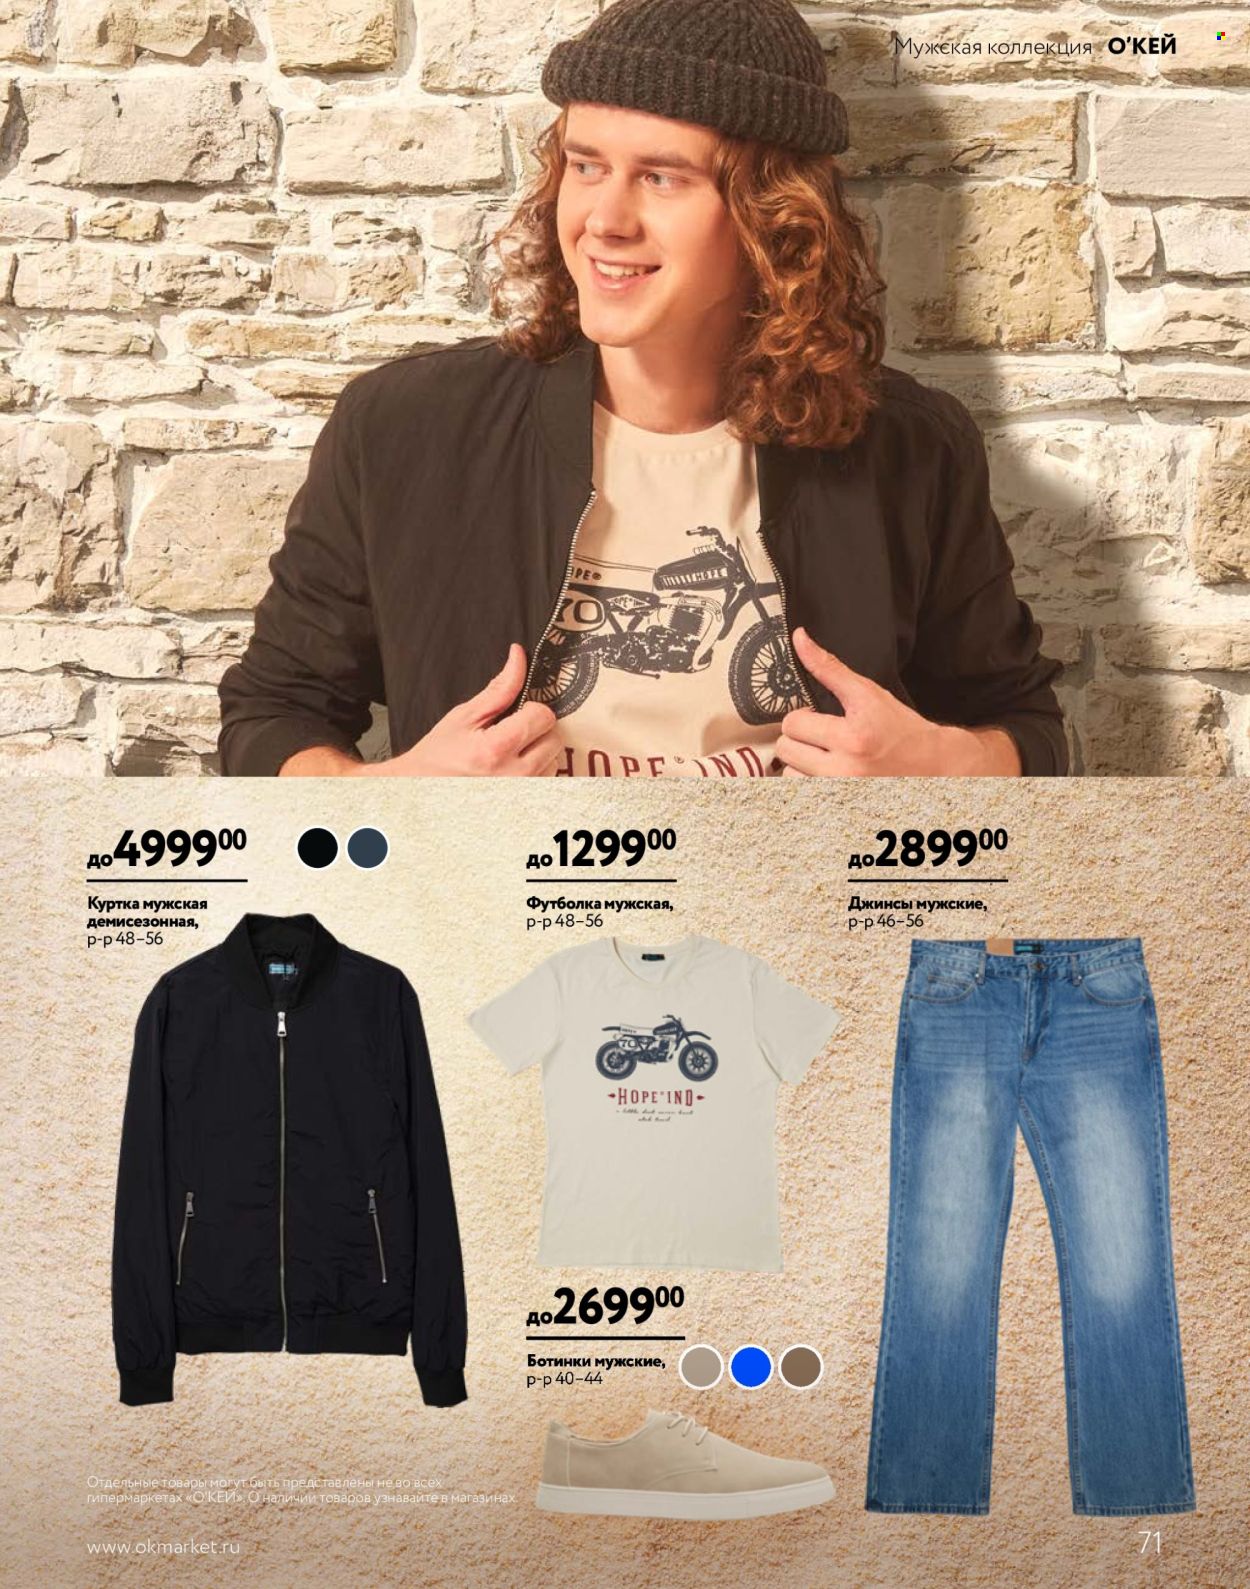 thumbnail - Каталог Окей - Товар со скидкой - куртка, джинсы, футболка, ботинки. Страница 71.